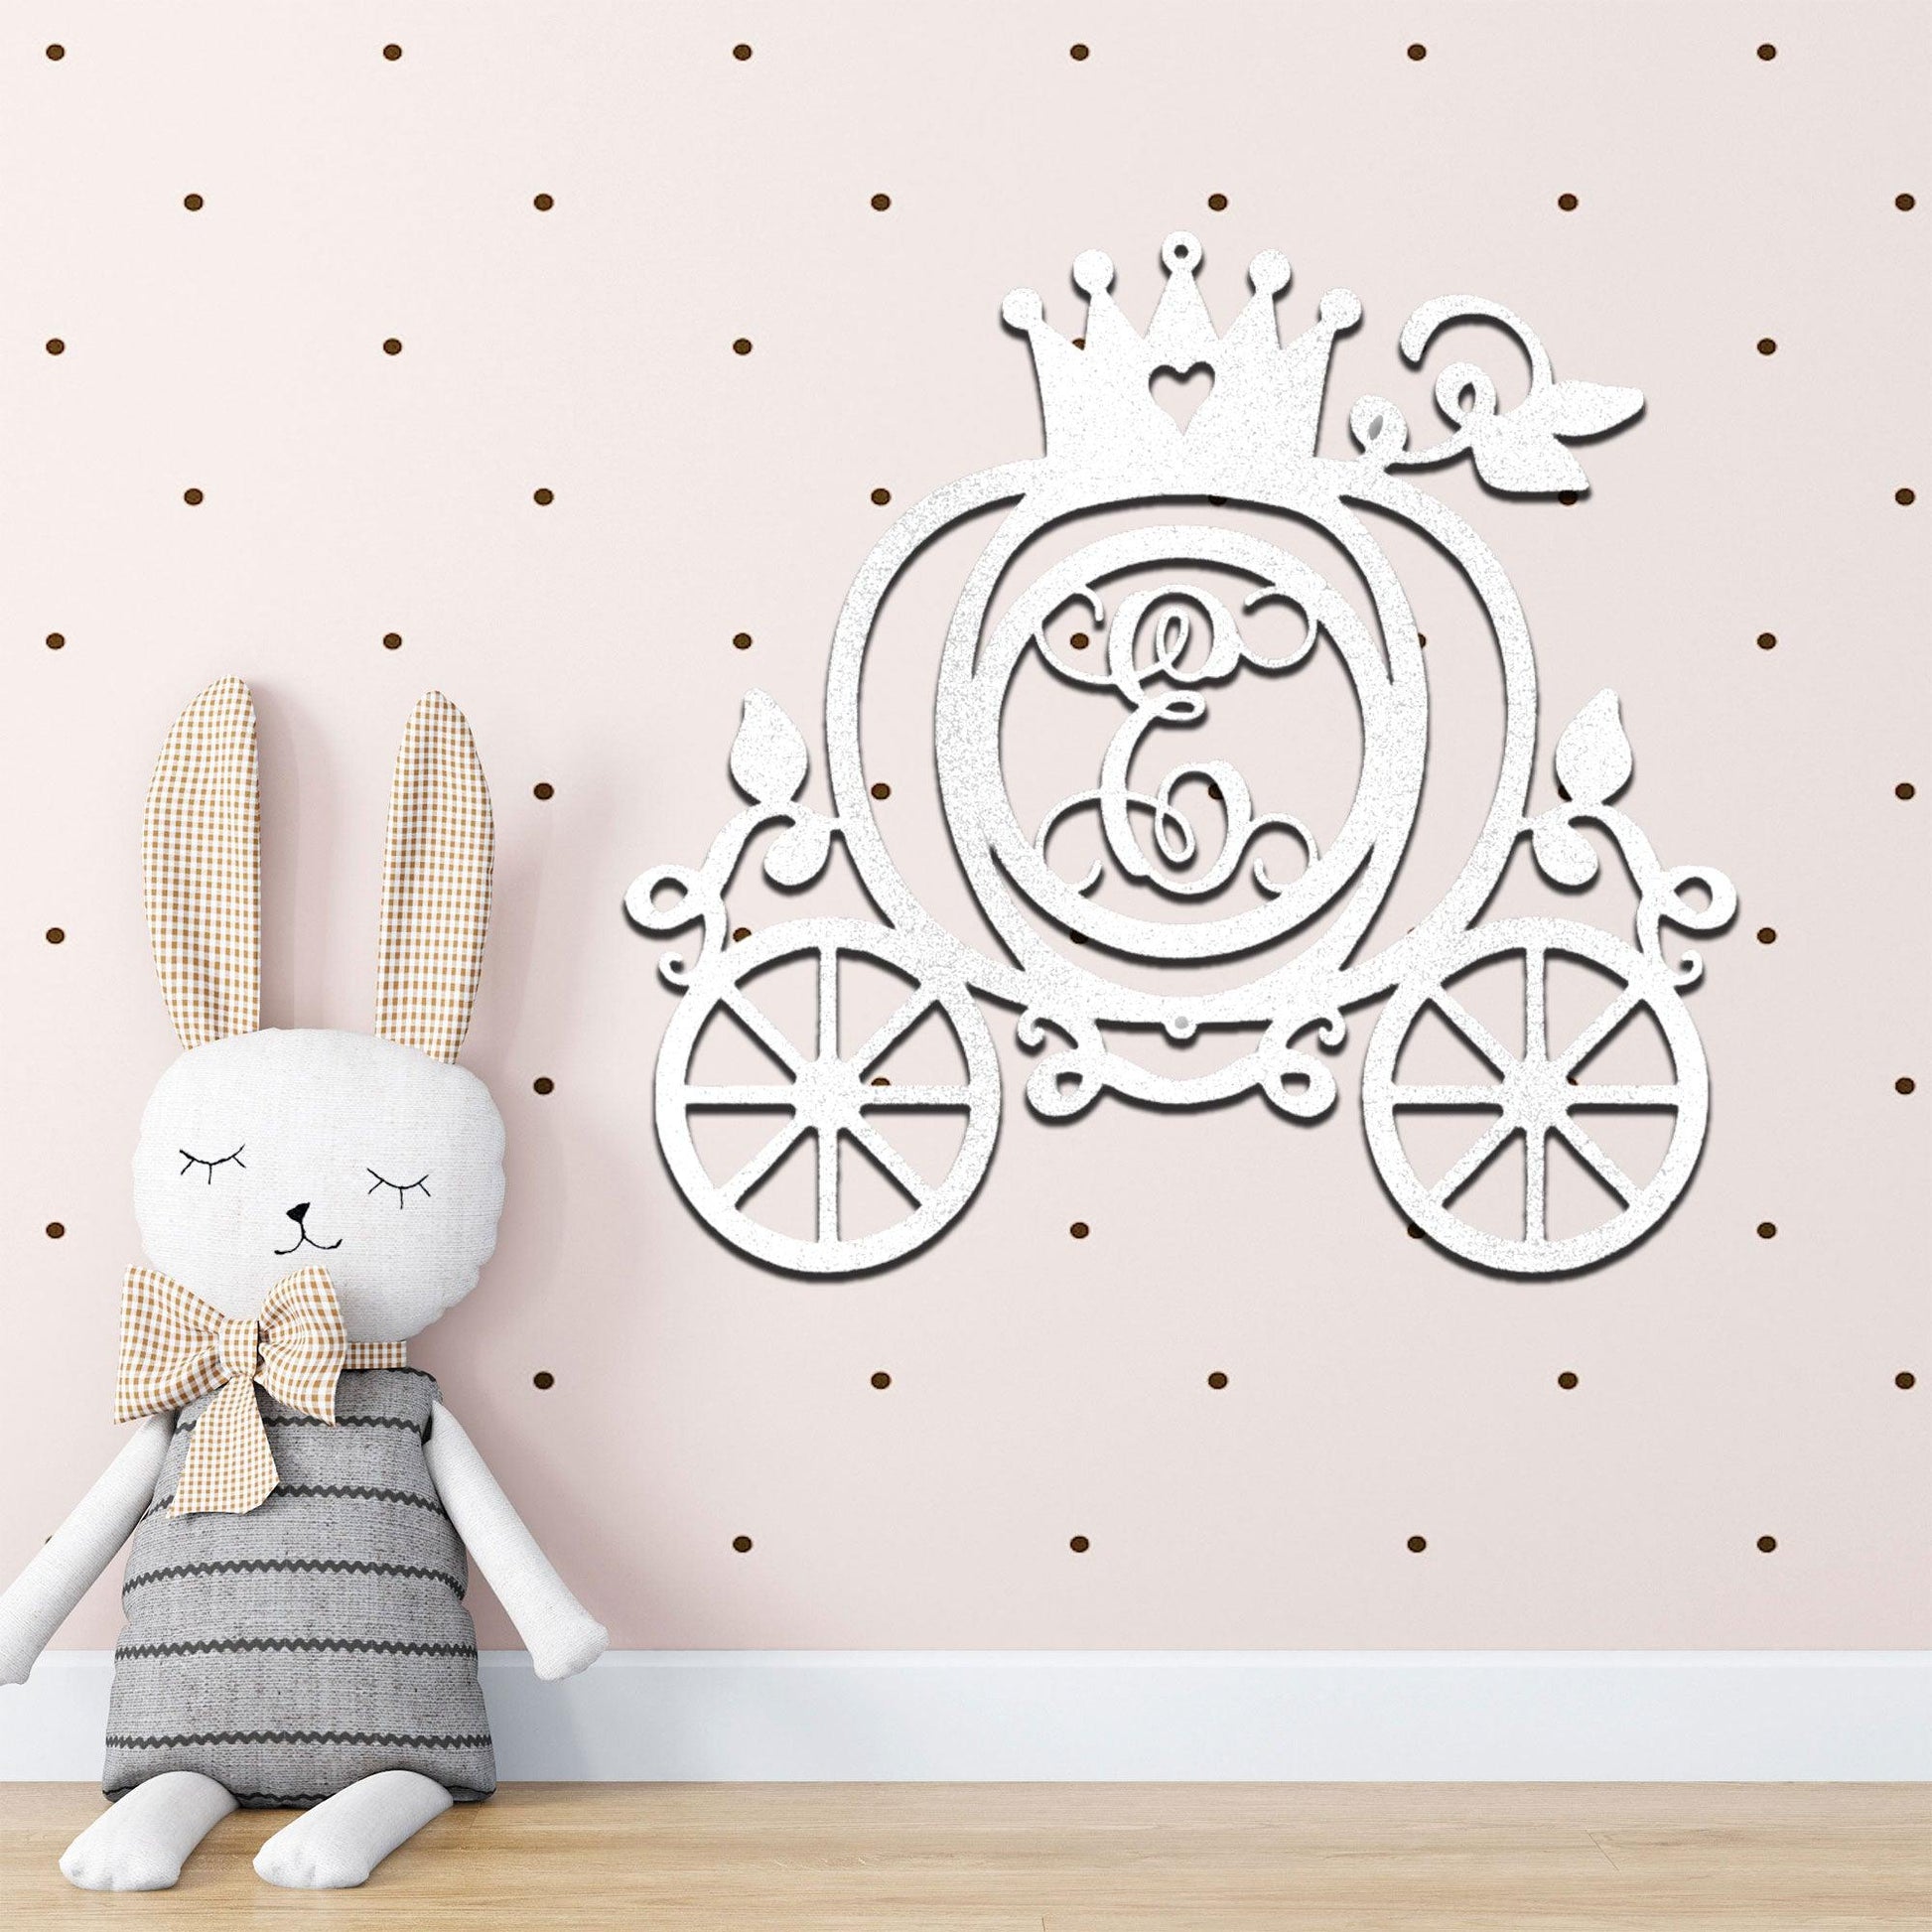 Cinderella Princess Carriage Custom Initial Metal Art Wall Sign Decor - Mallard Moon Gift Shop